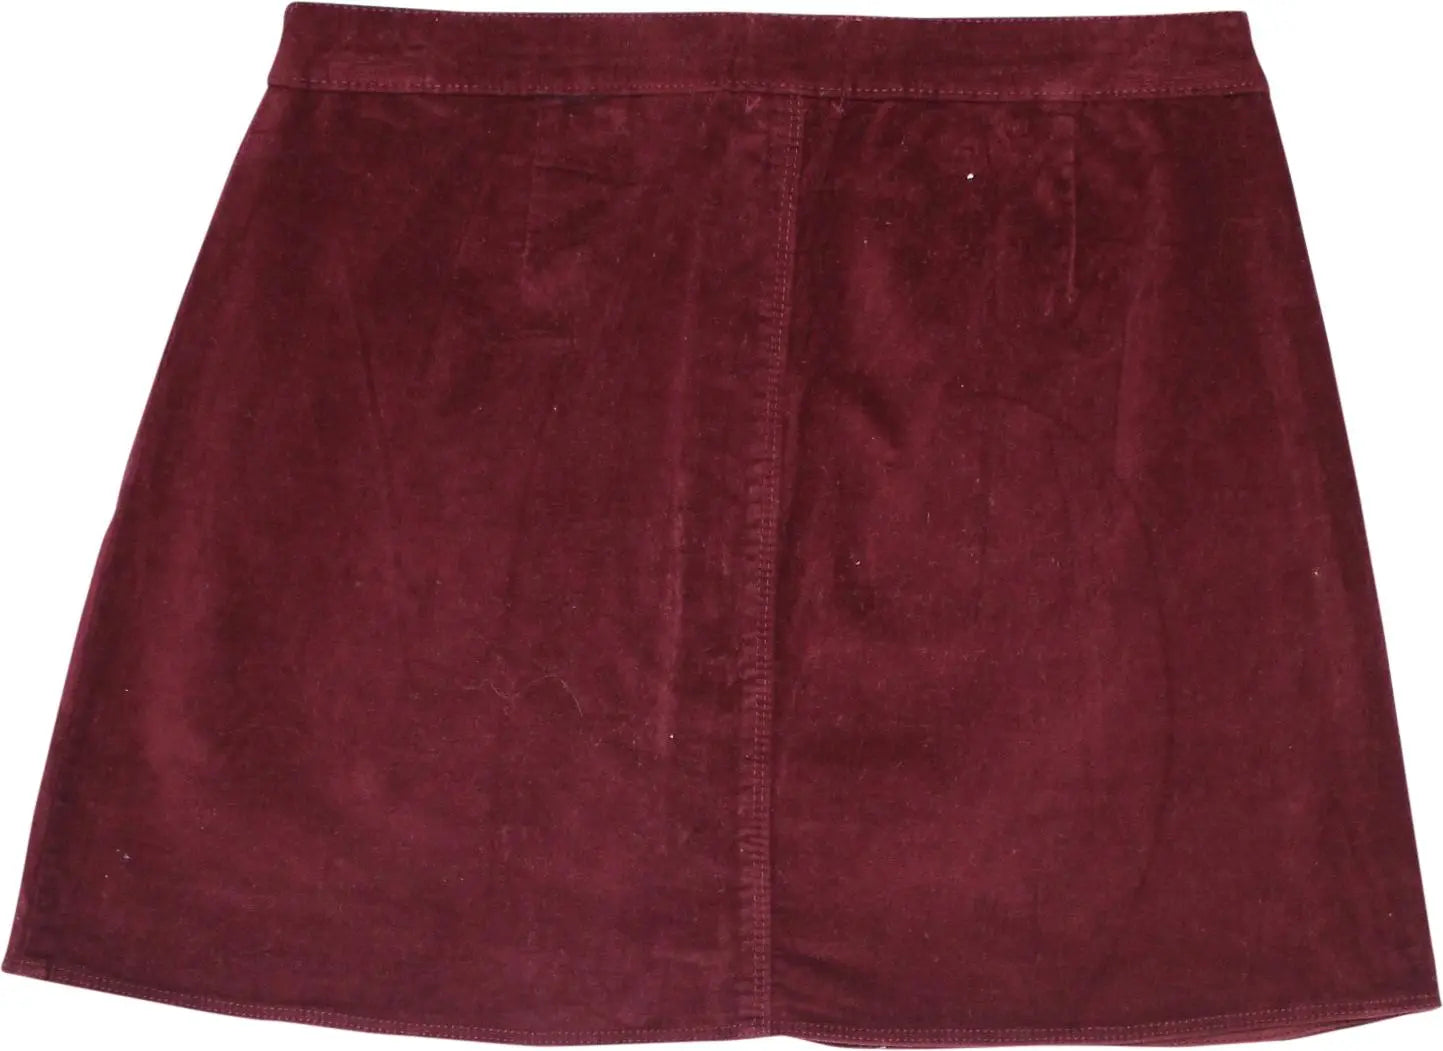 Zara - Velvet Skirt- ThriftTale.com - Vintage and second handclothing